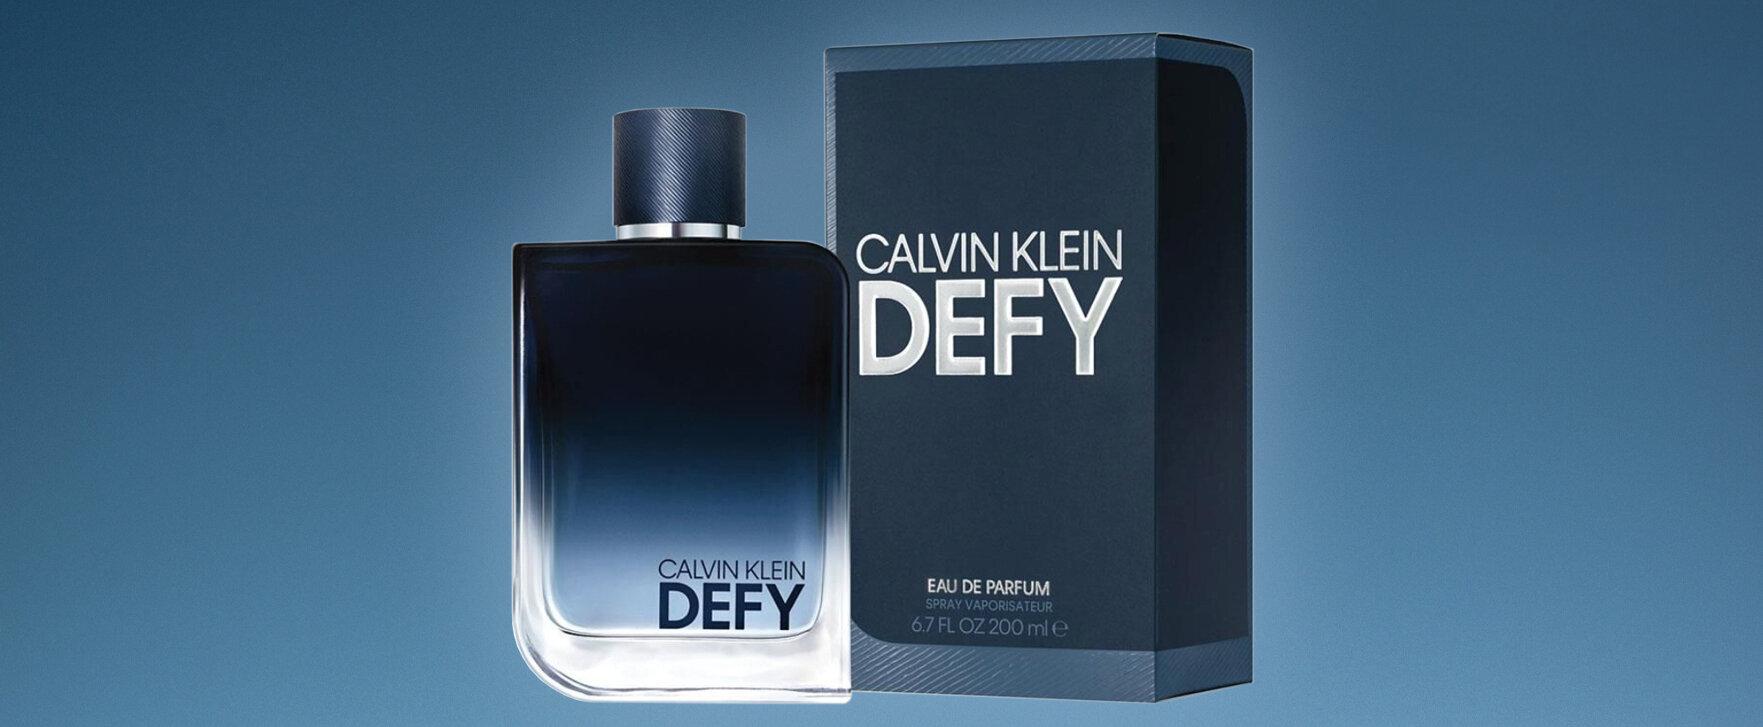 Calvin Klein Launches “Defy” as an Eau de Parfum